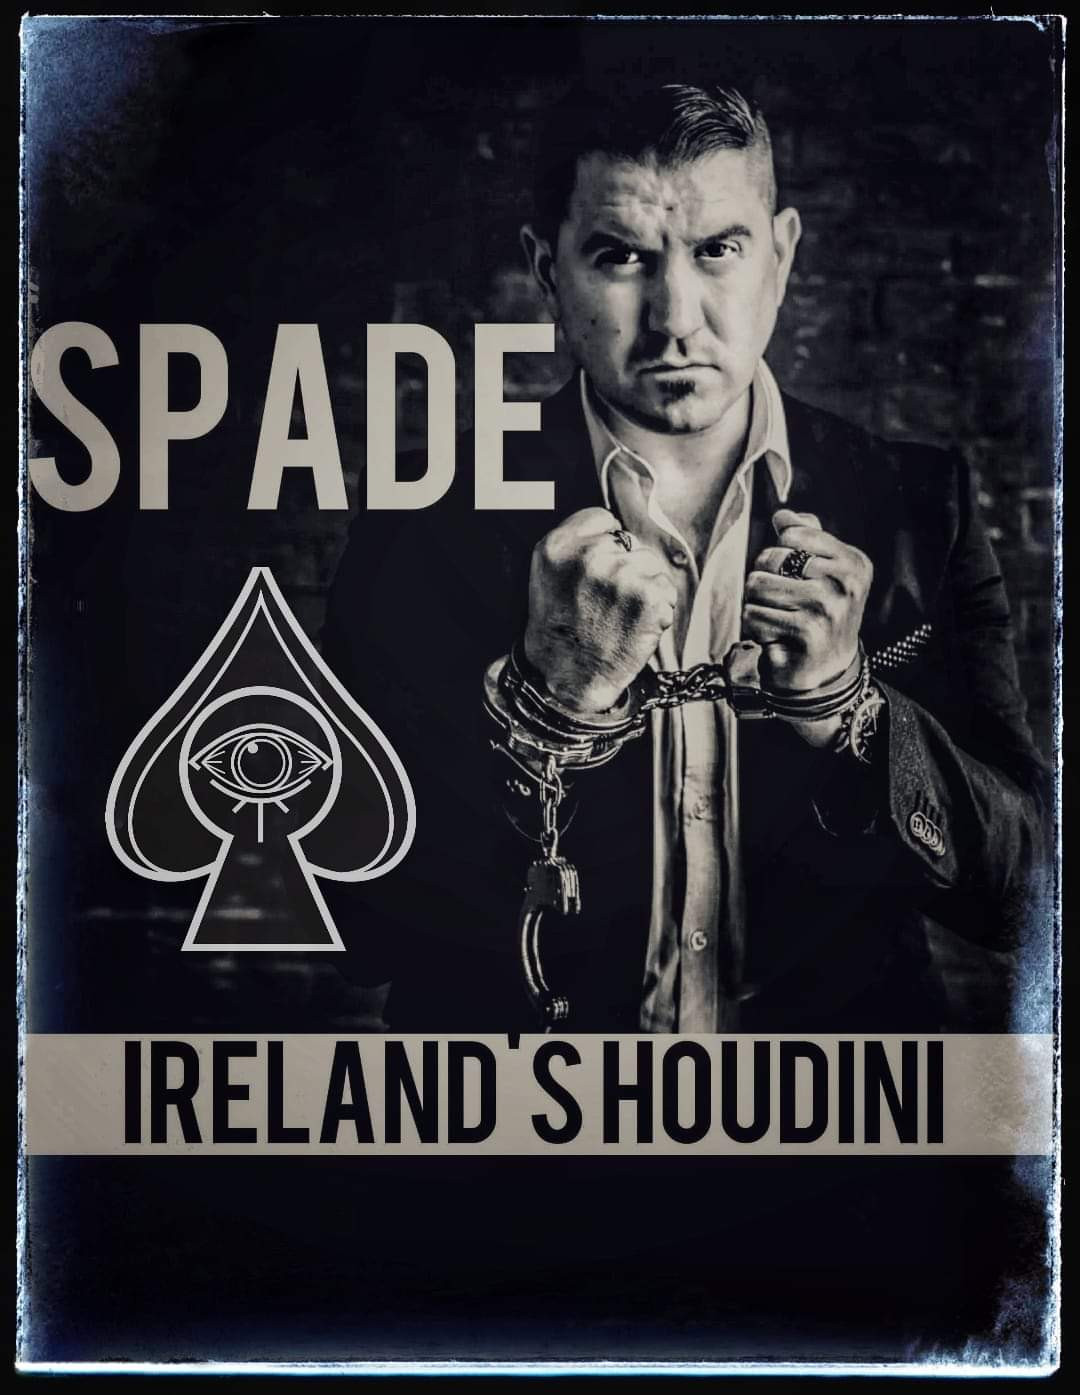 Steve Spade Magician